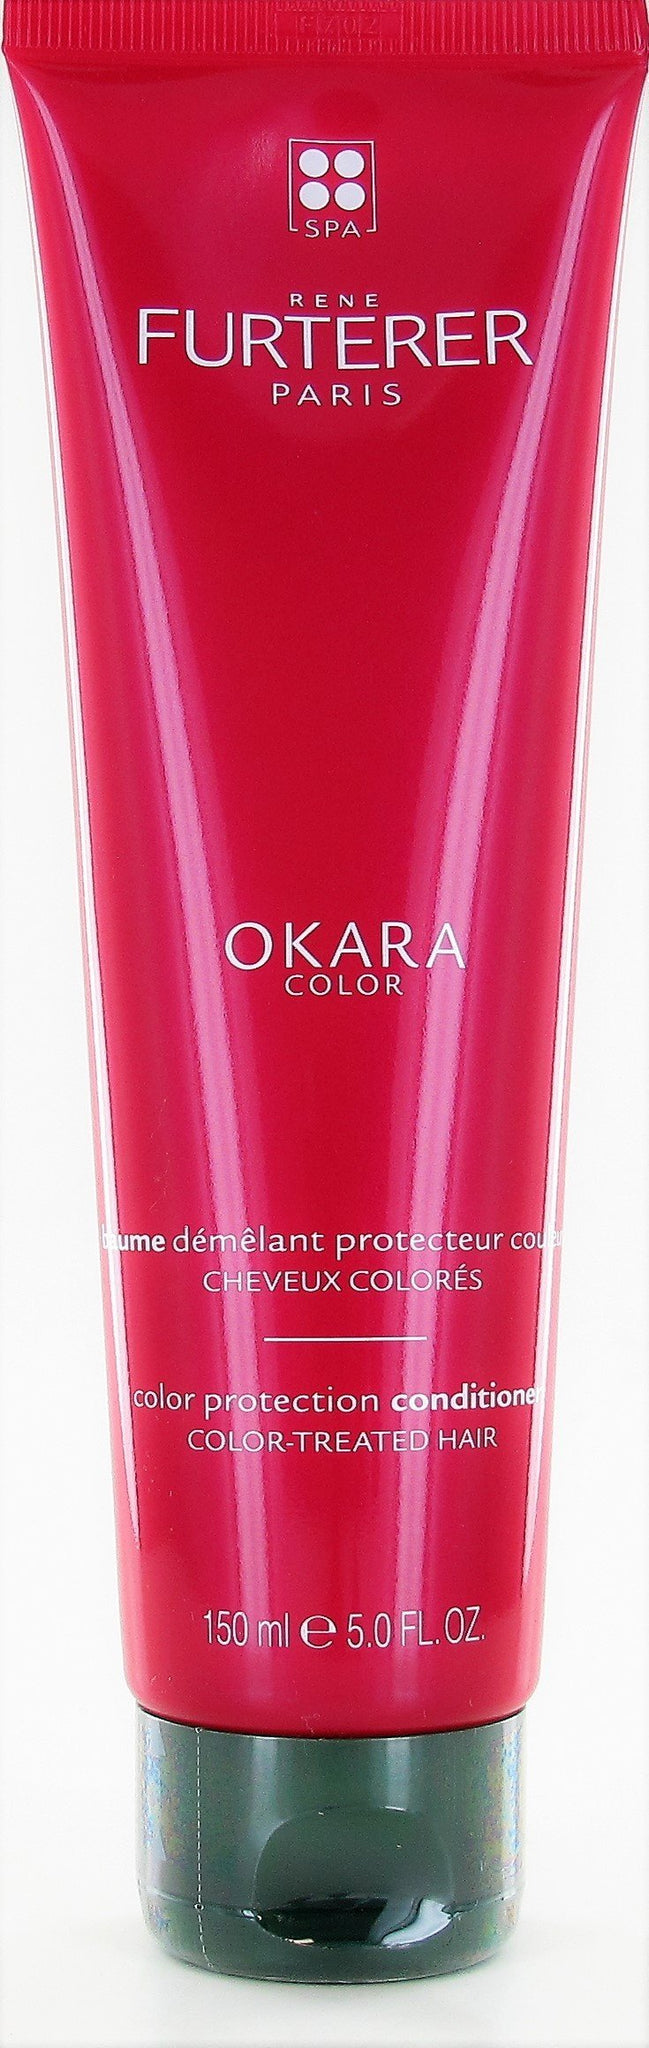 Rene Furterer OKARA Color Protection Conditioner 5.0 oz